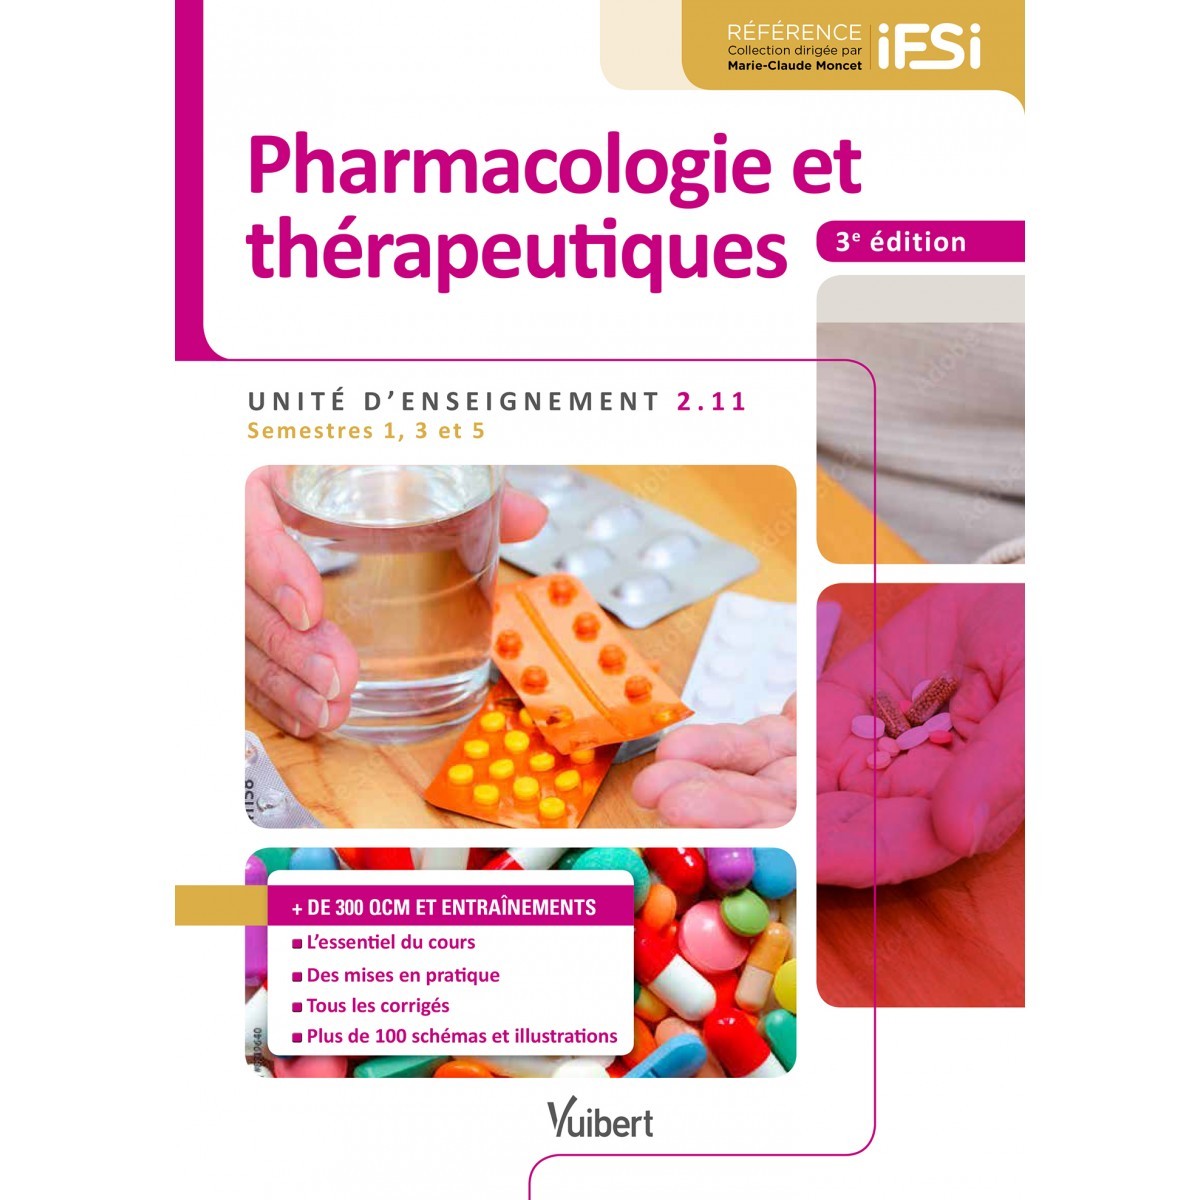 Pharmacologie & thérapeutiques UE 2.11